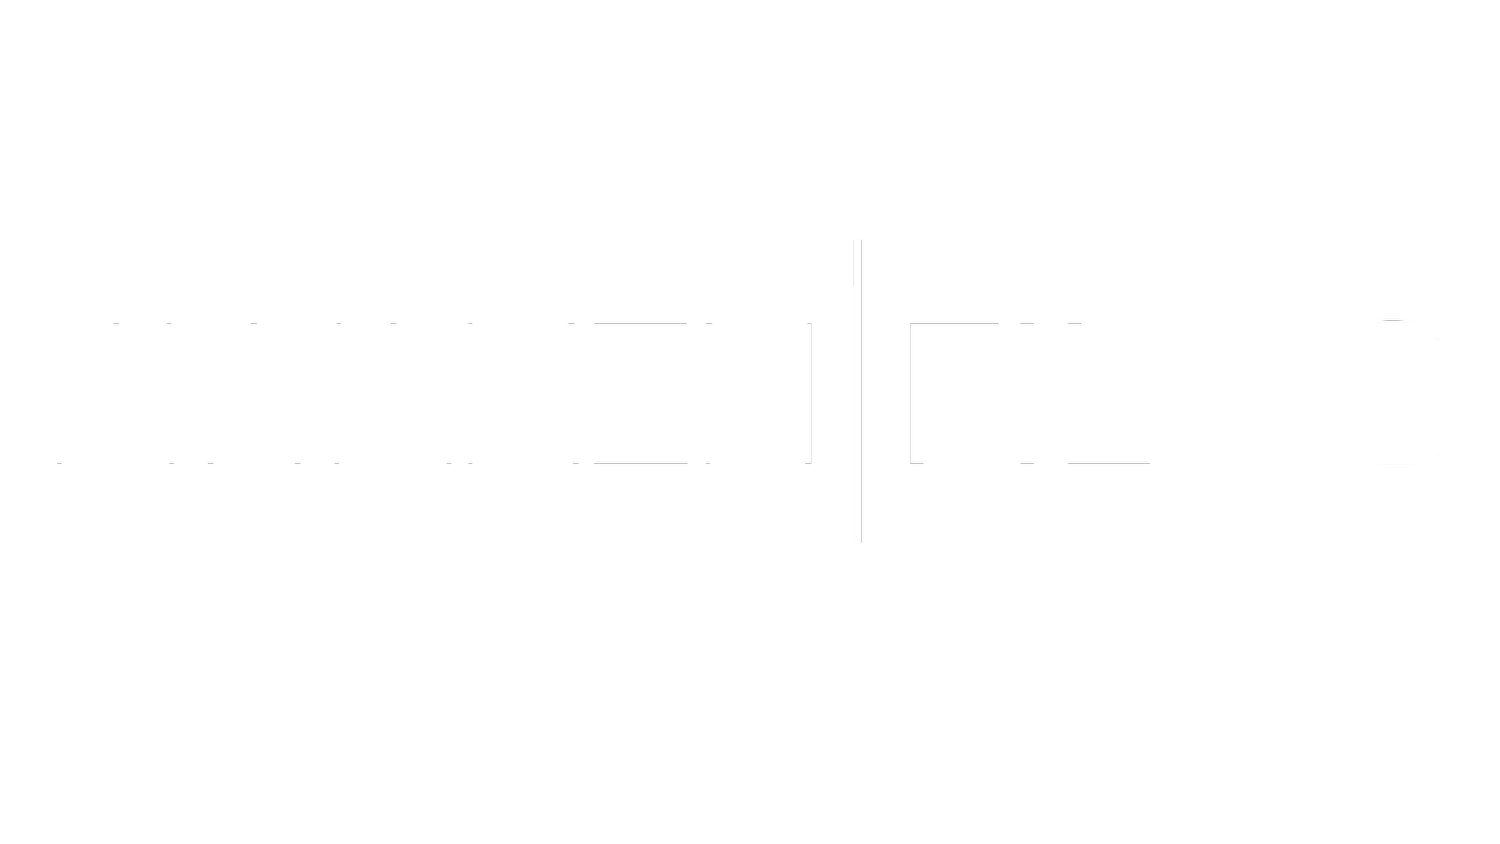 Awaken Films